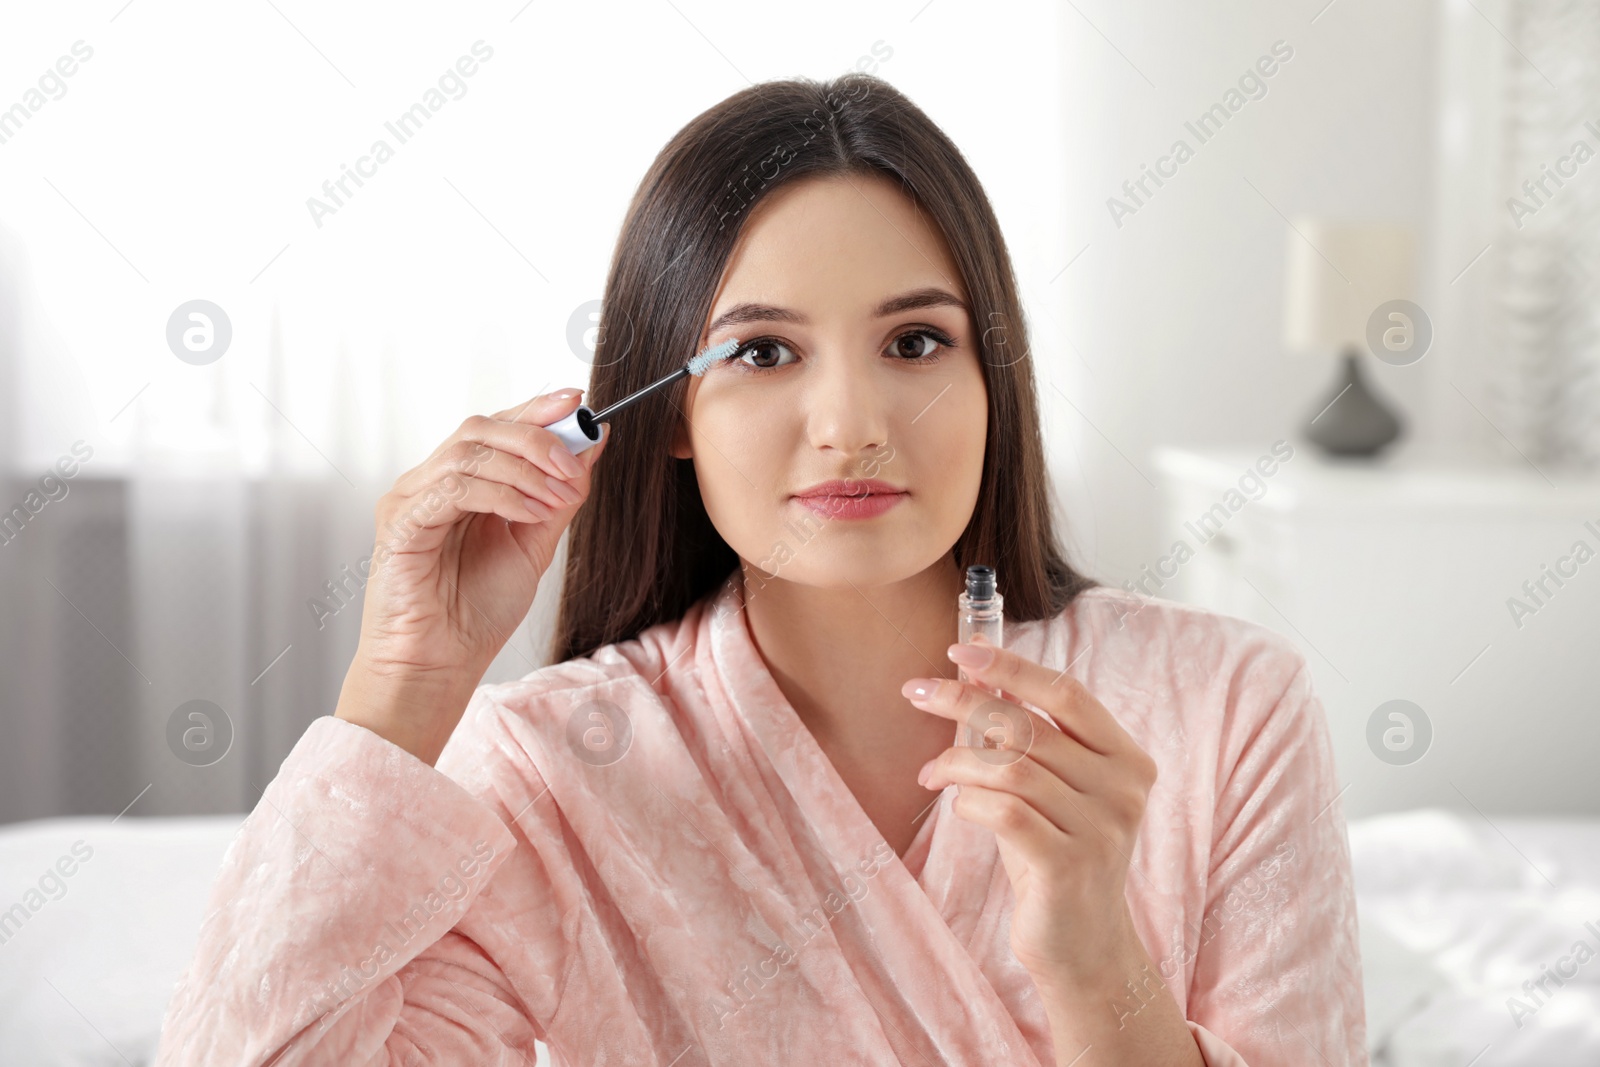 Photo of Beautiful woman applying oil onto her eyelashes indoors